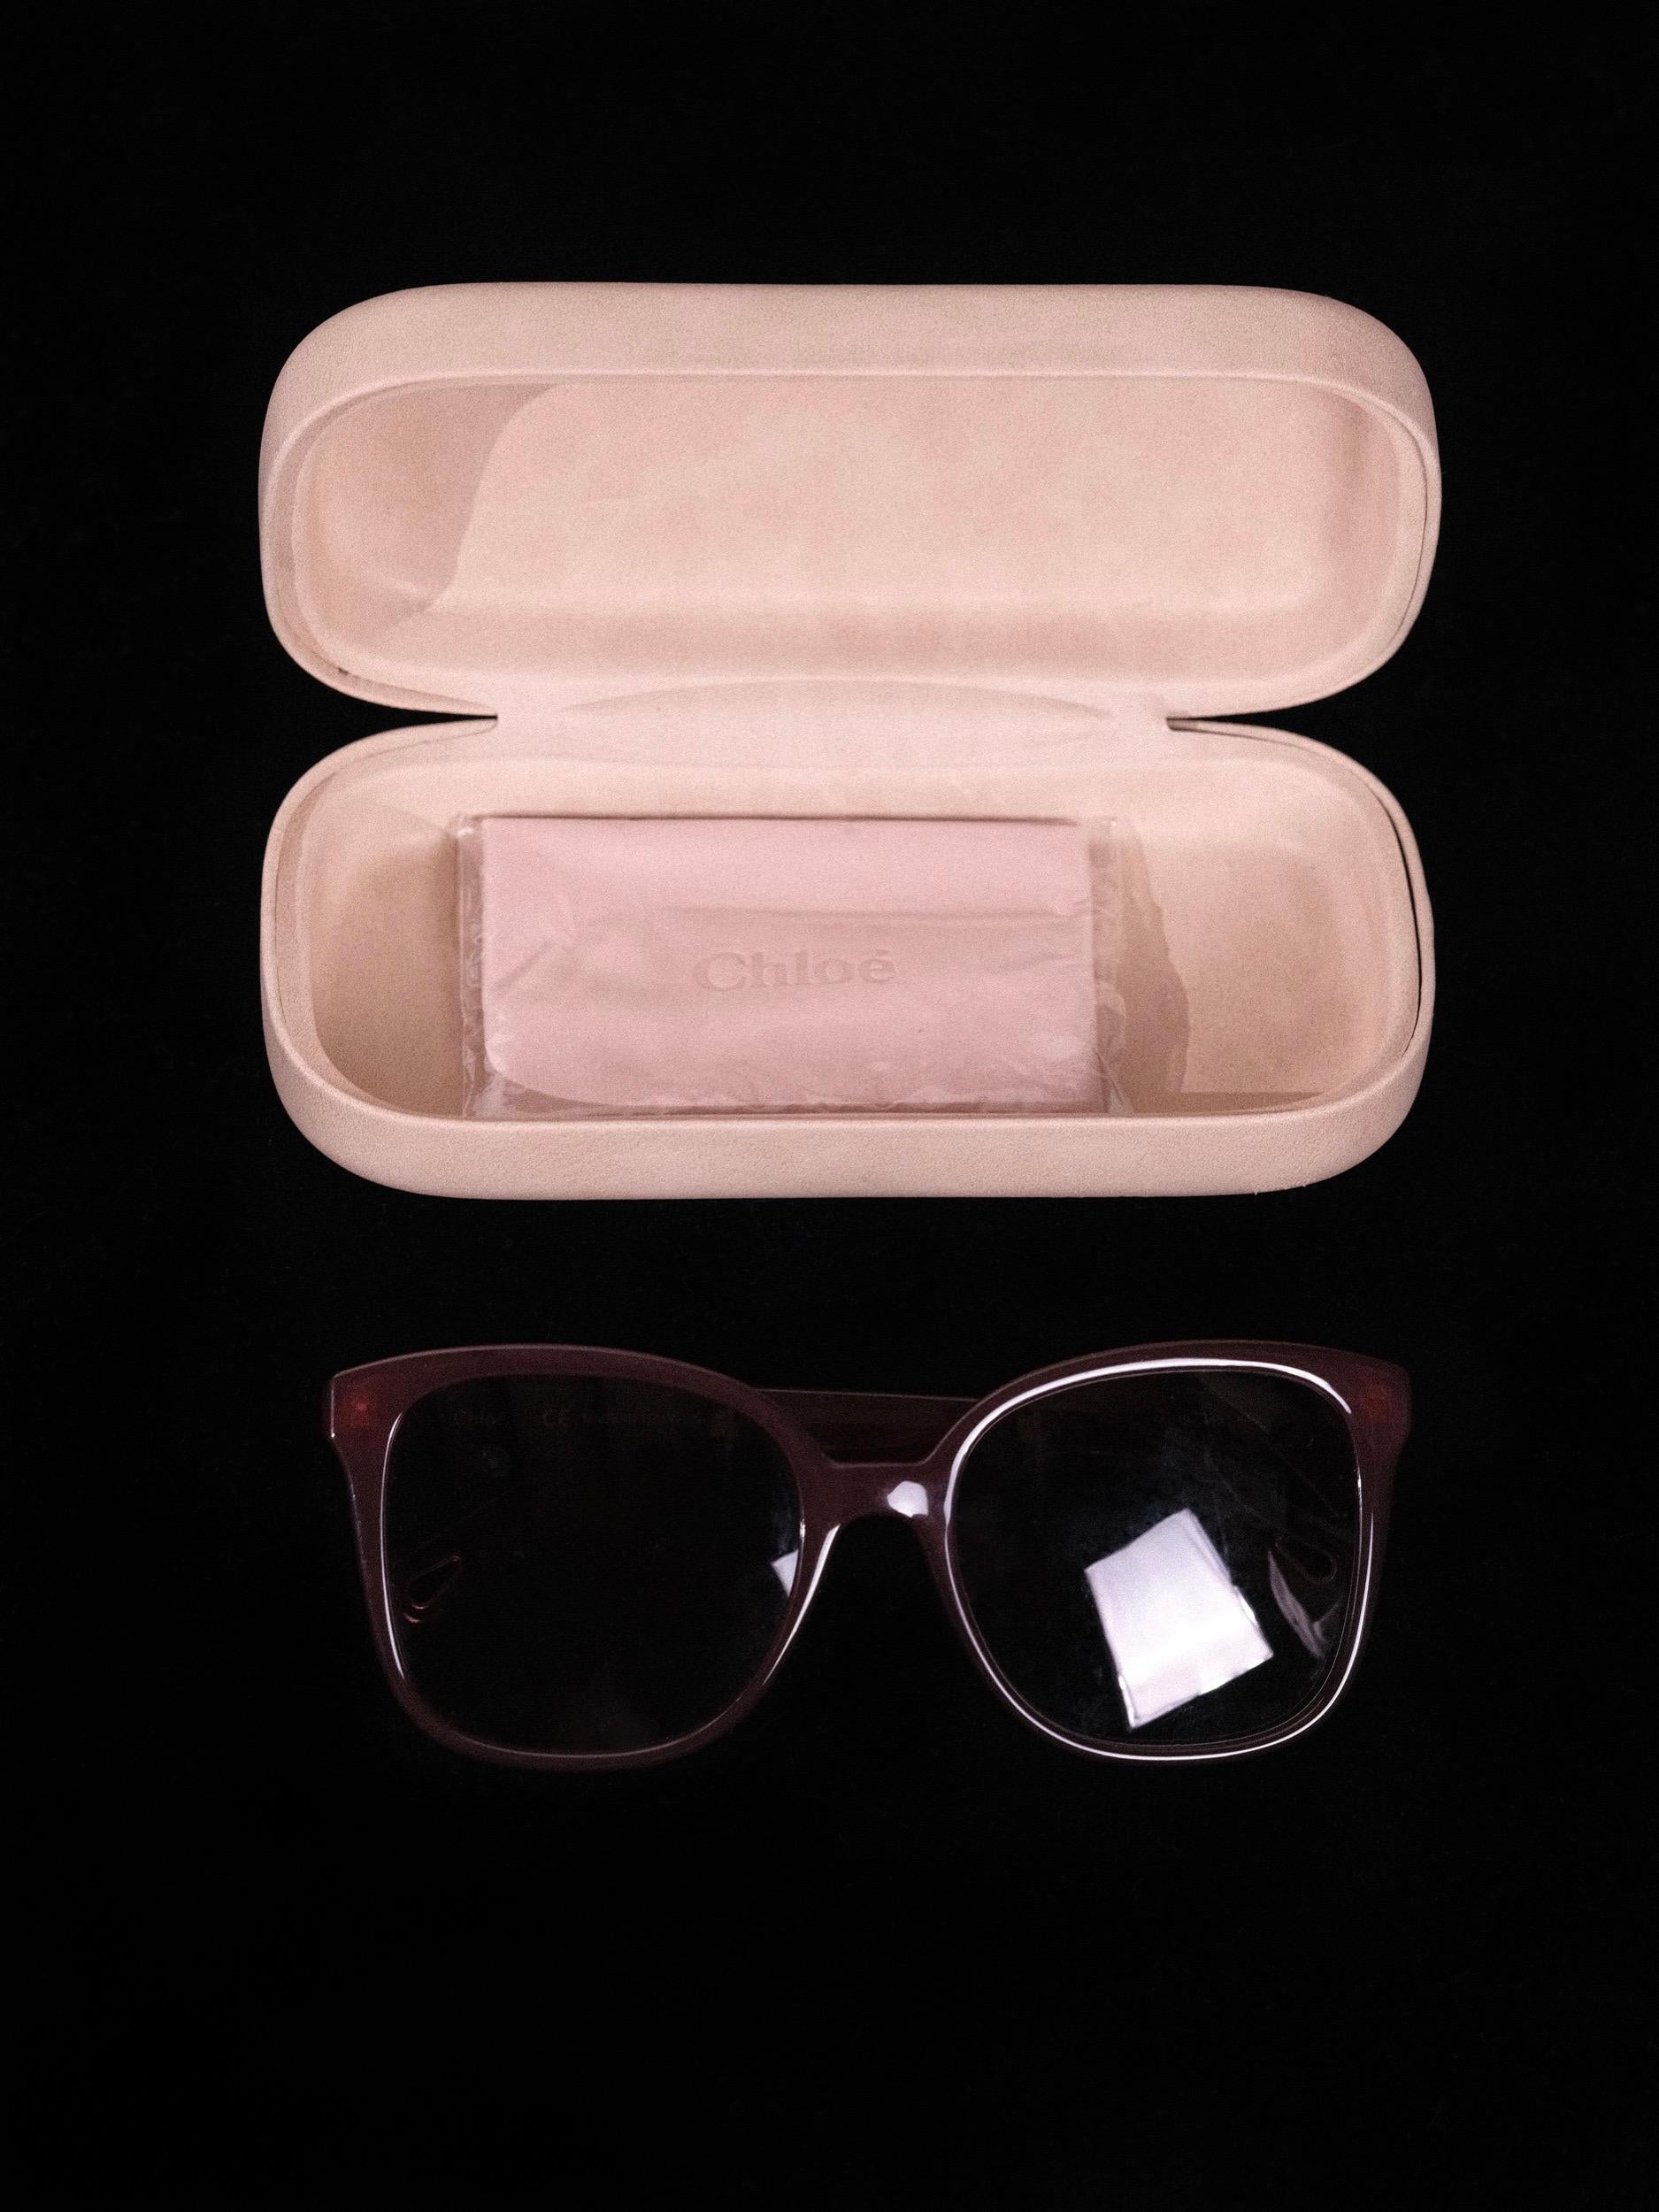 Chloé Sunglasses Square Burgundy Gradient Lens w/Case and Cloth 2000's  For Sale 4